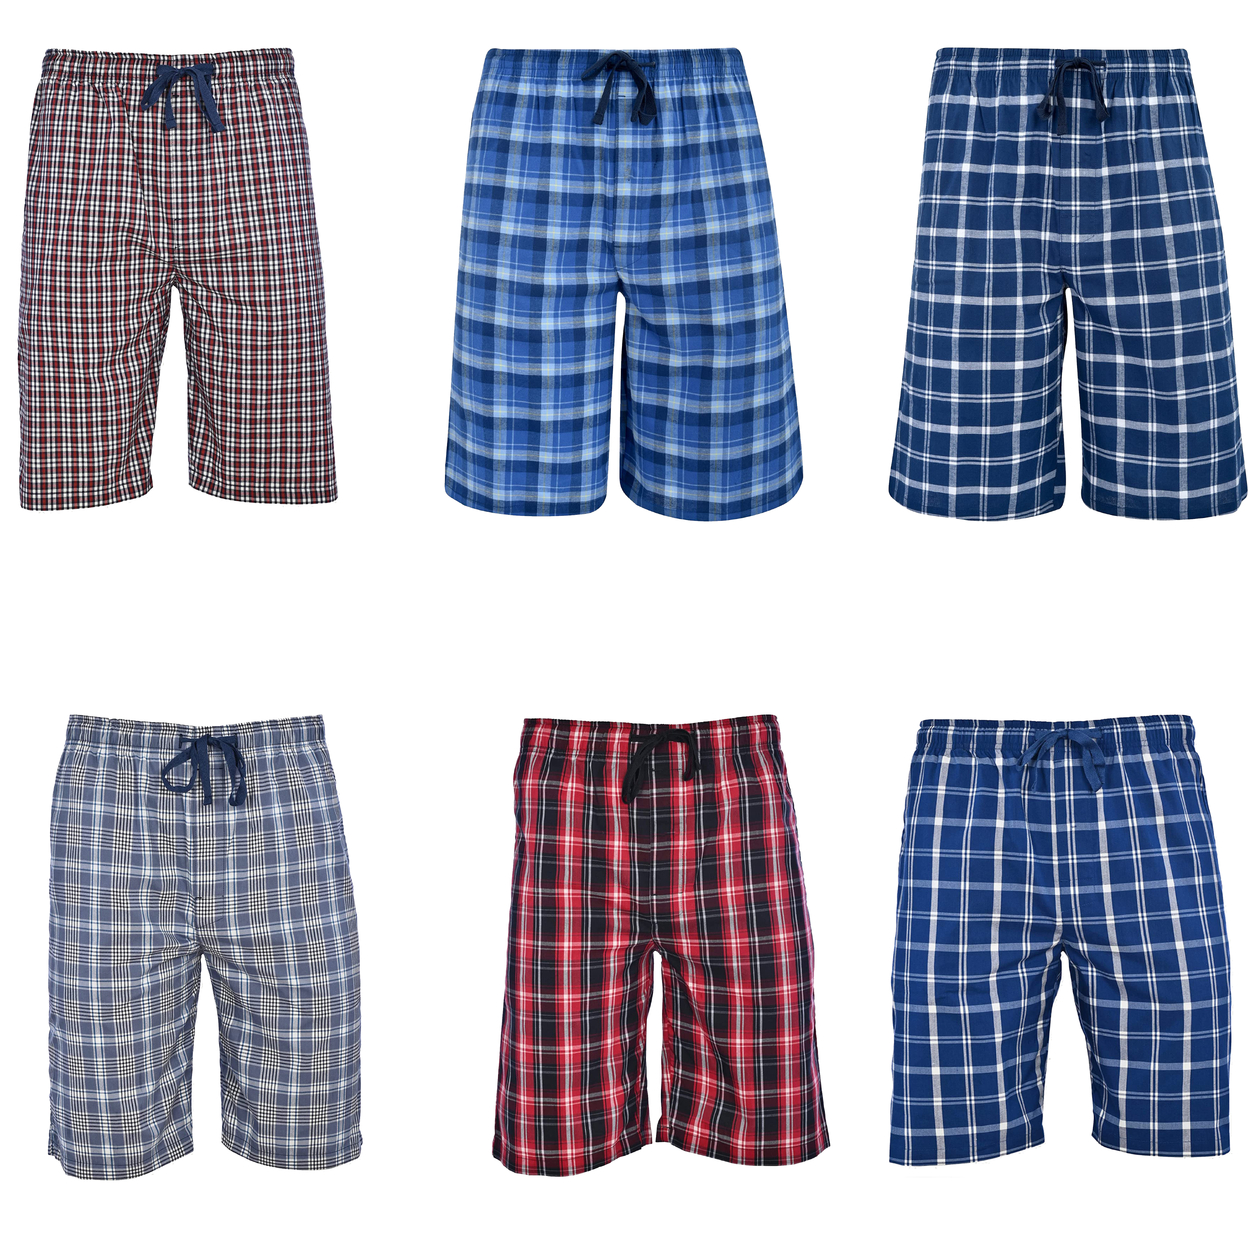 2-Pack: Men's Ultra Soft Plaid Lounge Pajama Sleep Wear Shorts - Black & Tan, Small